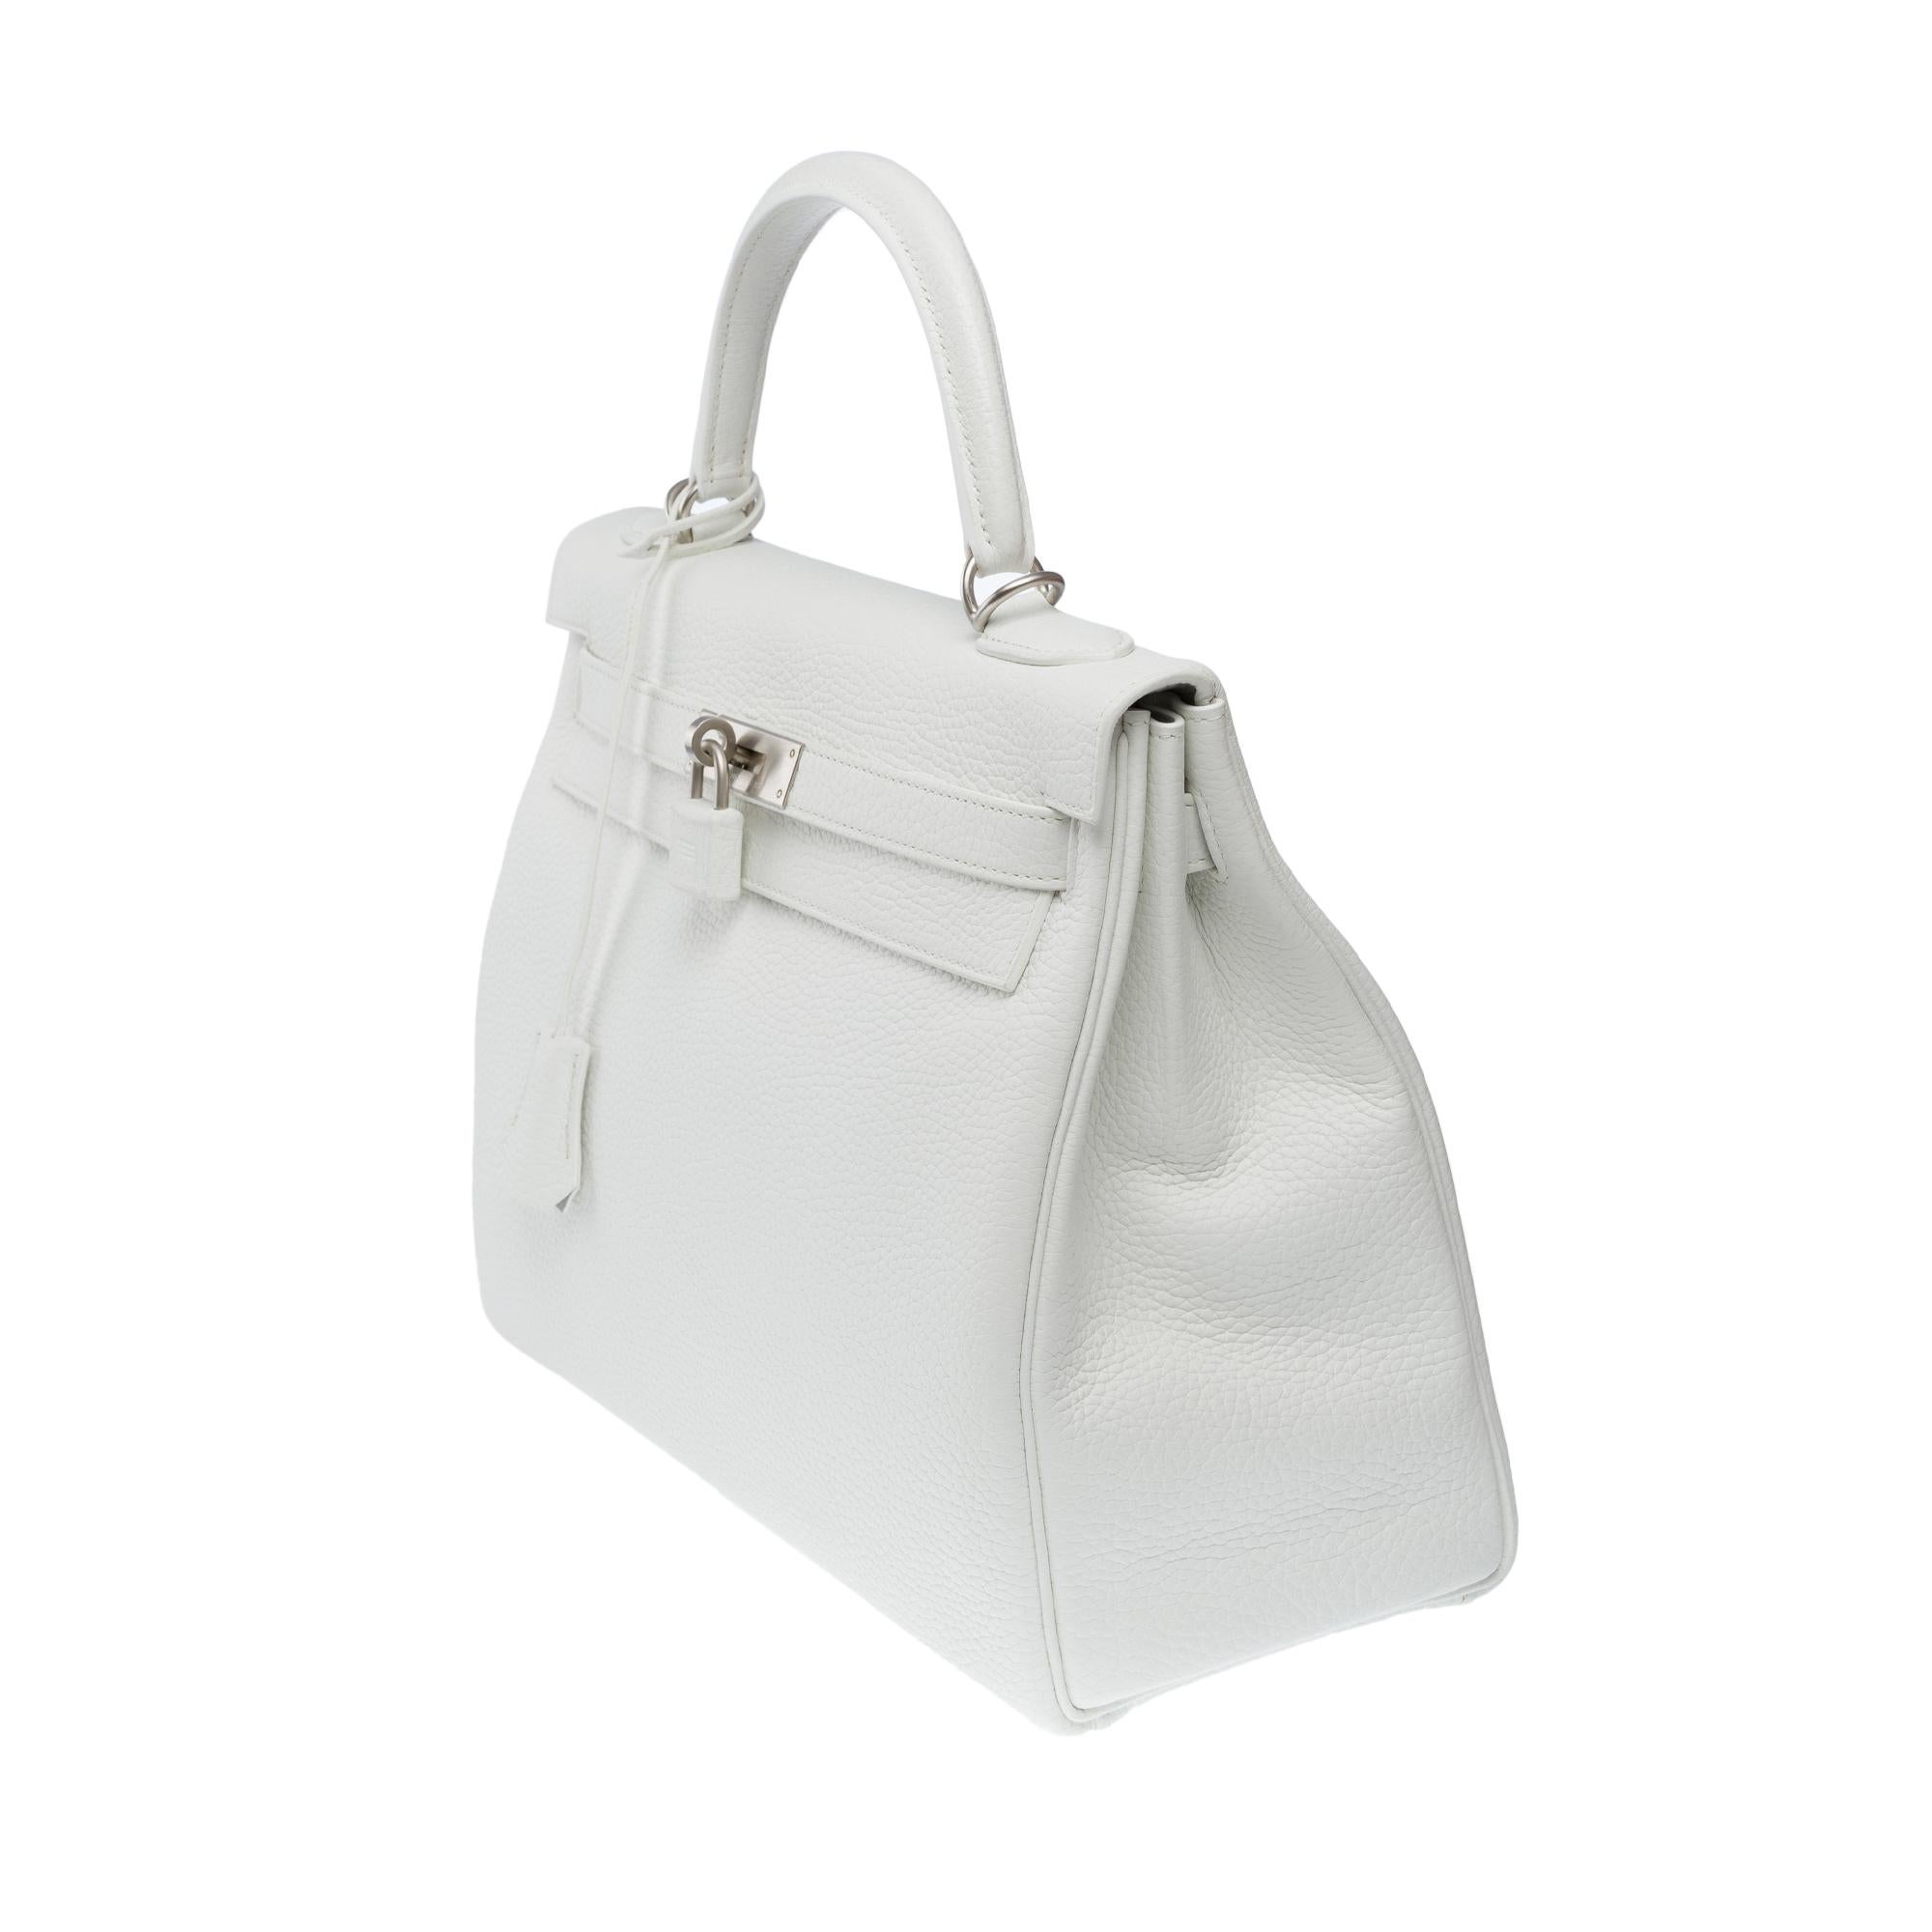 Hermès Kelly 32 handbag strap (HSO) in White & Grey interior leather, BSHW 1